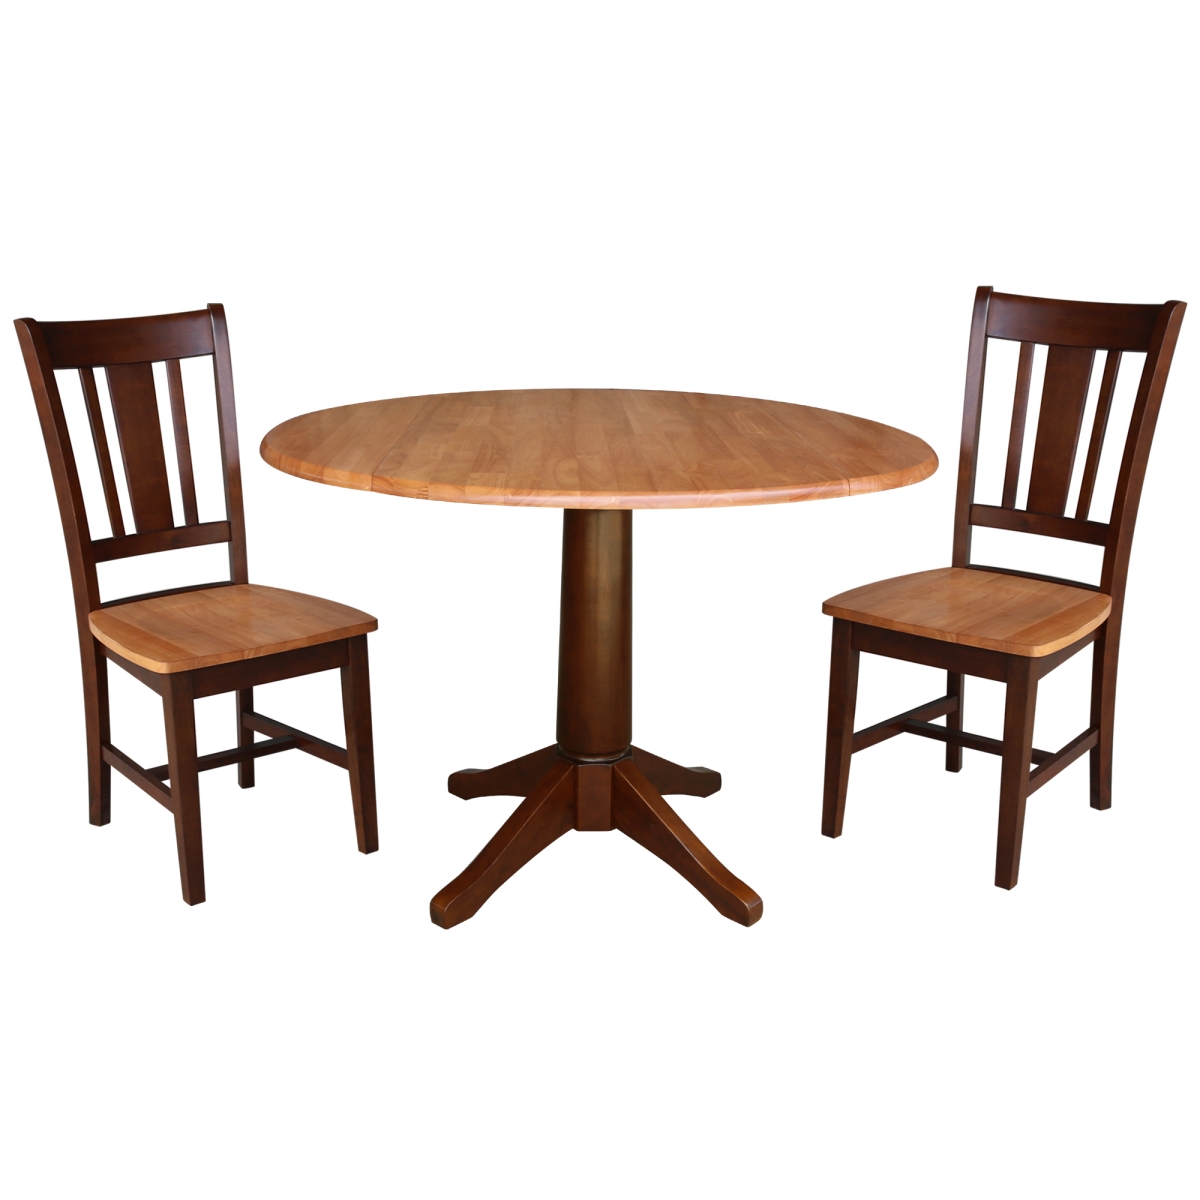 K58-42dpt-27b-c10-2 42 In. Round Top Pedestal Table With 2 Chairs - Cinnemon & Espresso